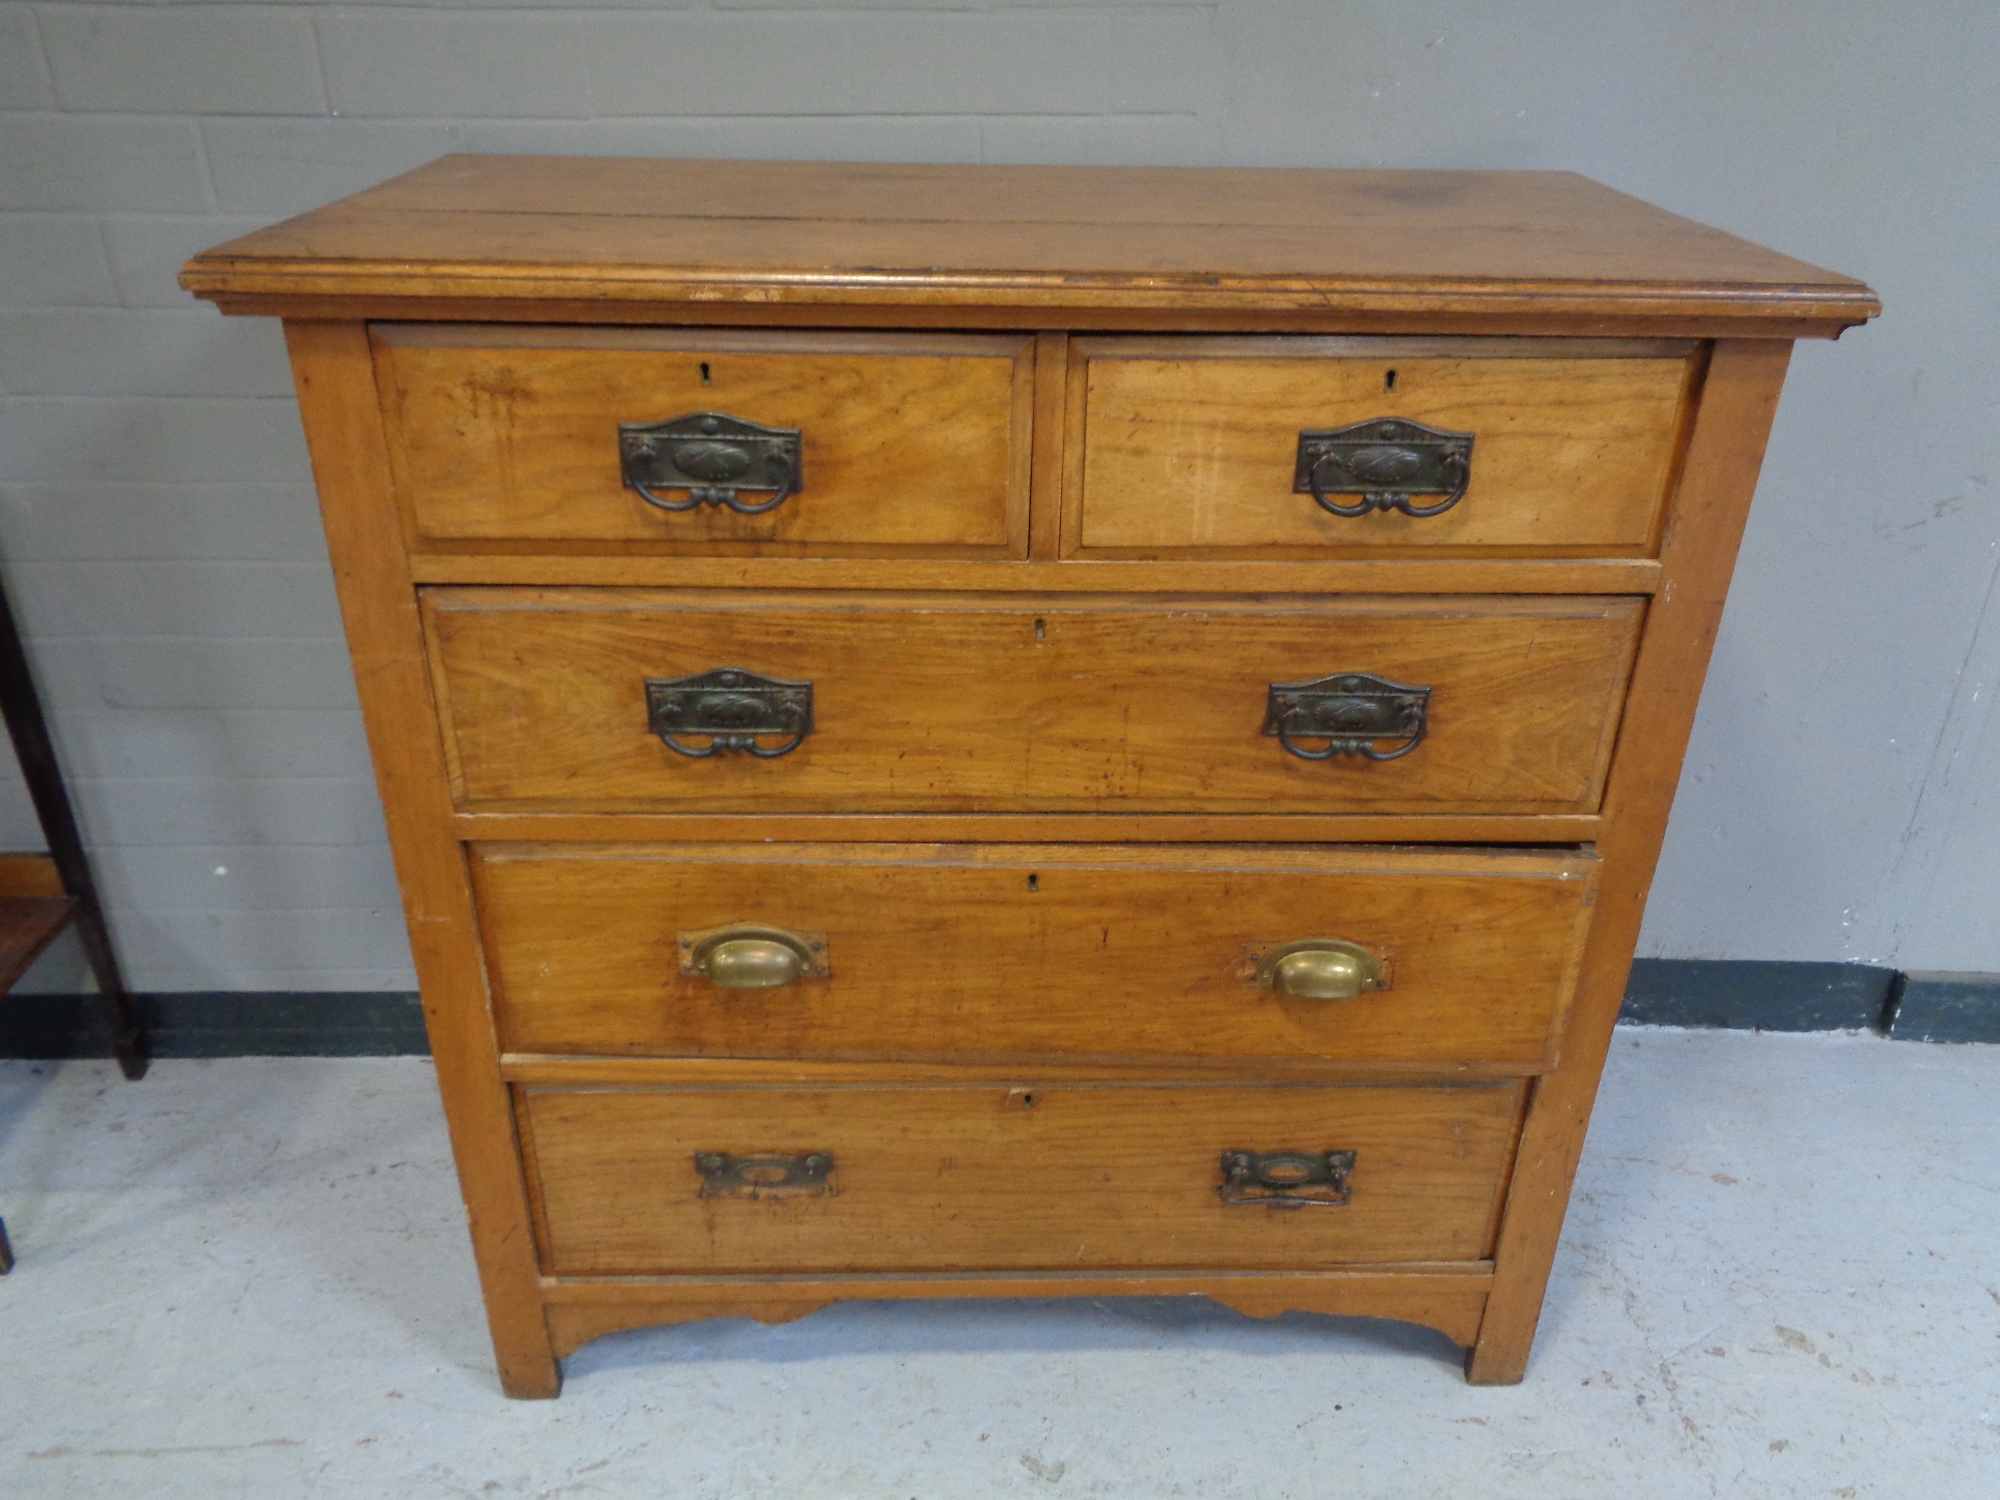 An Edwardian oak five drawer chest